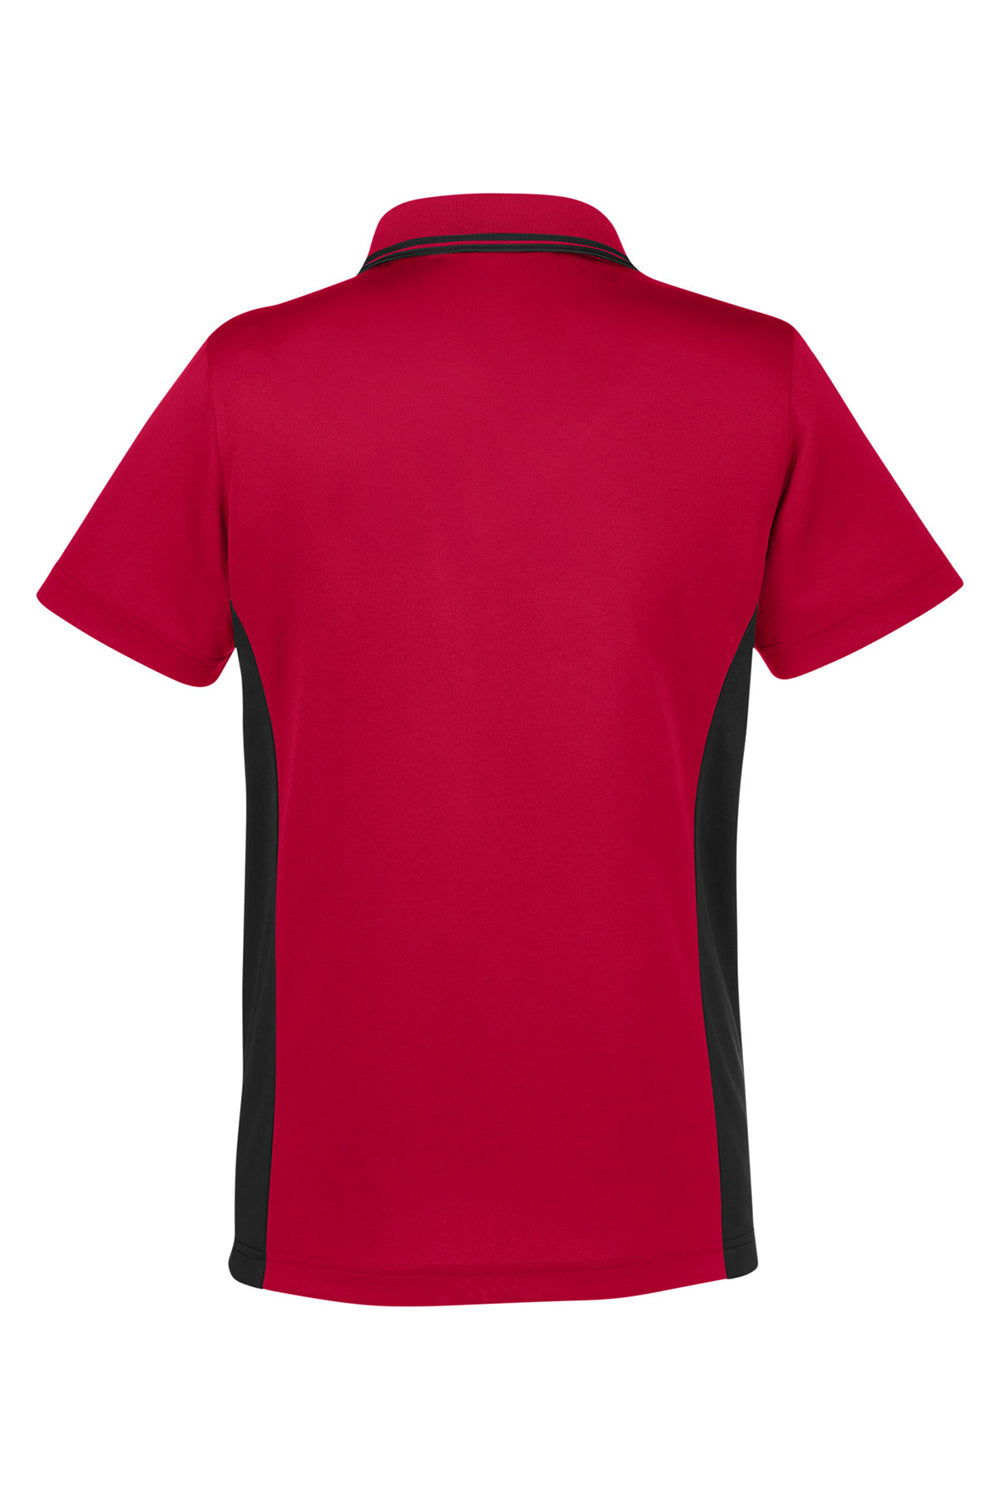 Harriton M386W Womens Flash Performance Moisture Wicking Colorblock Short Sleeve Polo Shirt Red/Black Flat Back